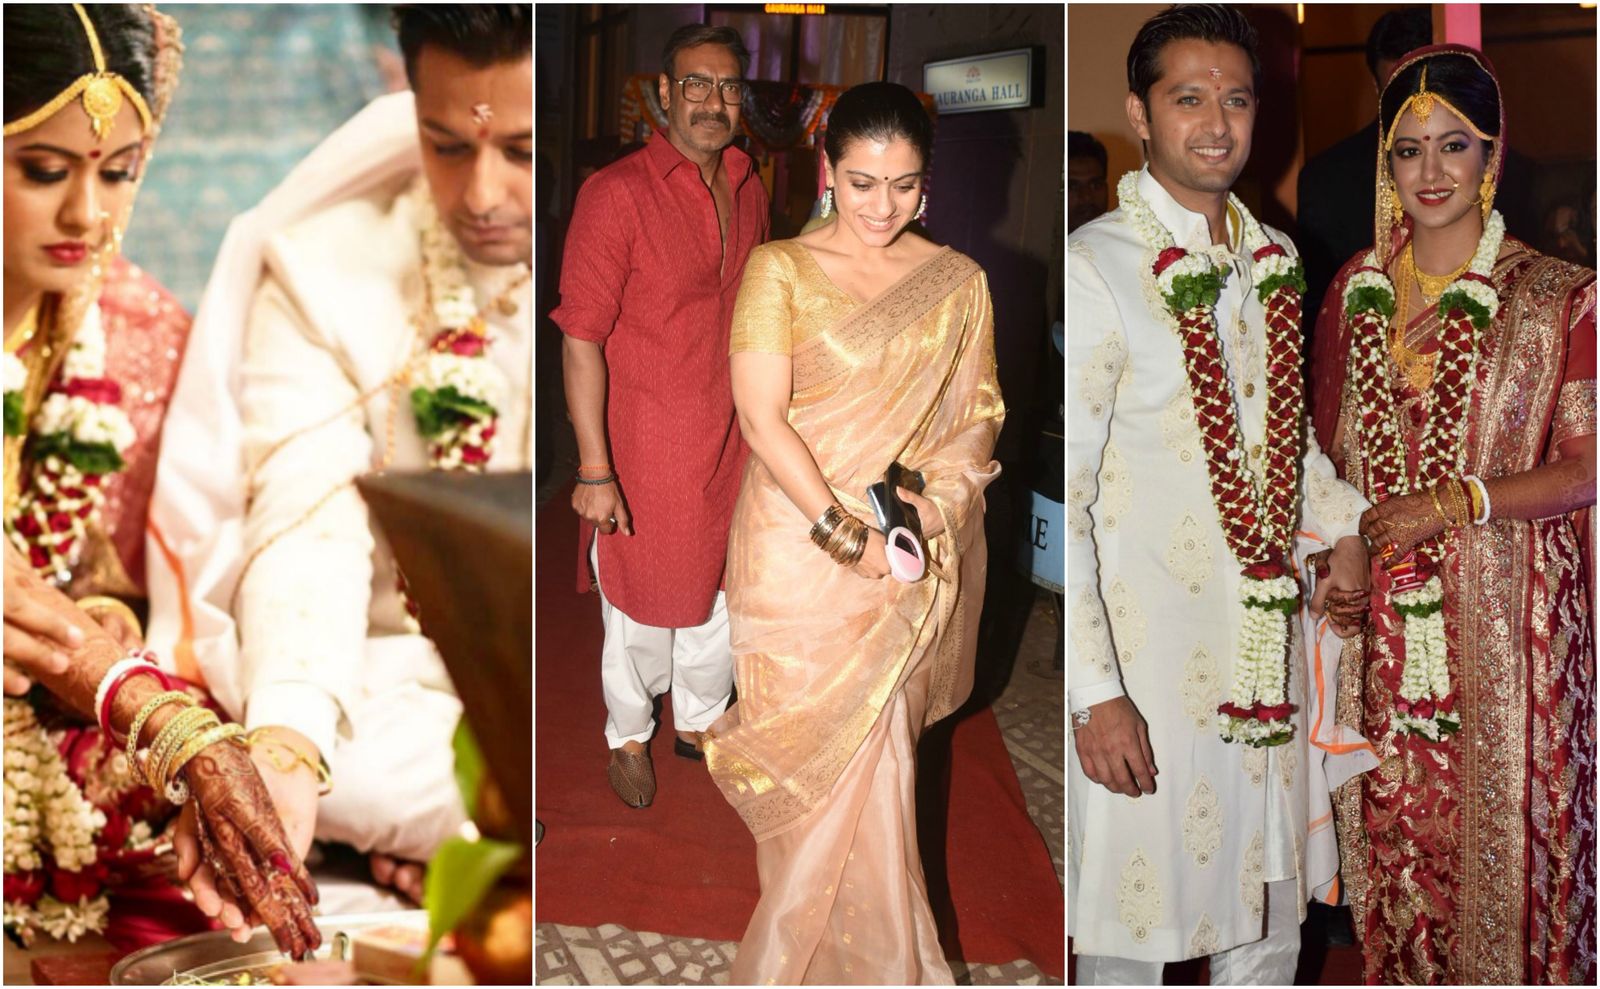 TV Actors Vatsal Sheth And Ishita Dutta Tie The Knot; Ajay Devgn, Kajol Spotted At The Ceremony!